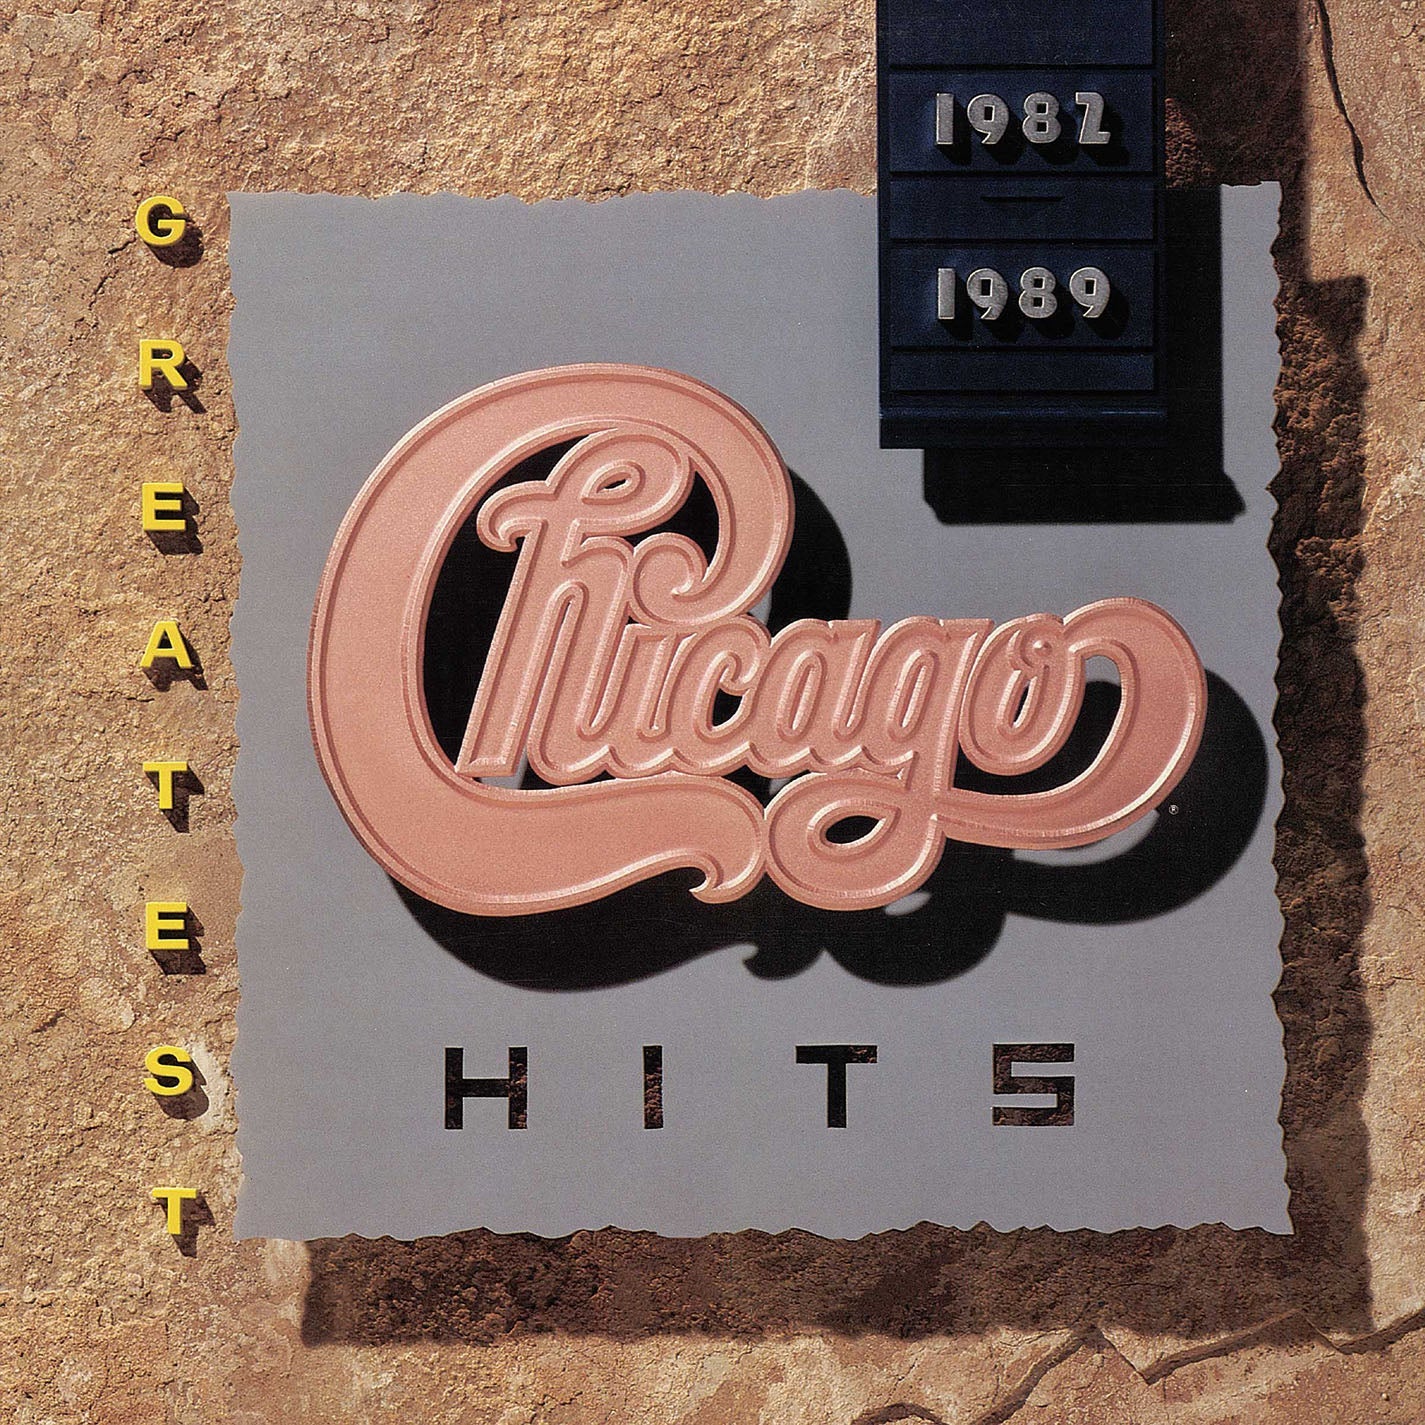 [DAMAGED] Chicago - Greatest Hits 1982 - 1989